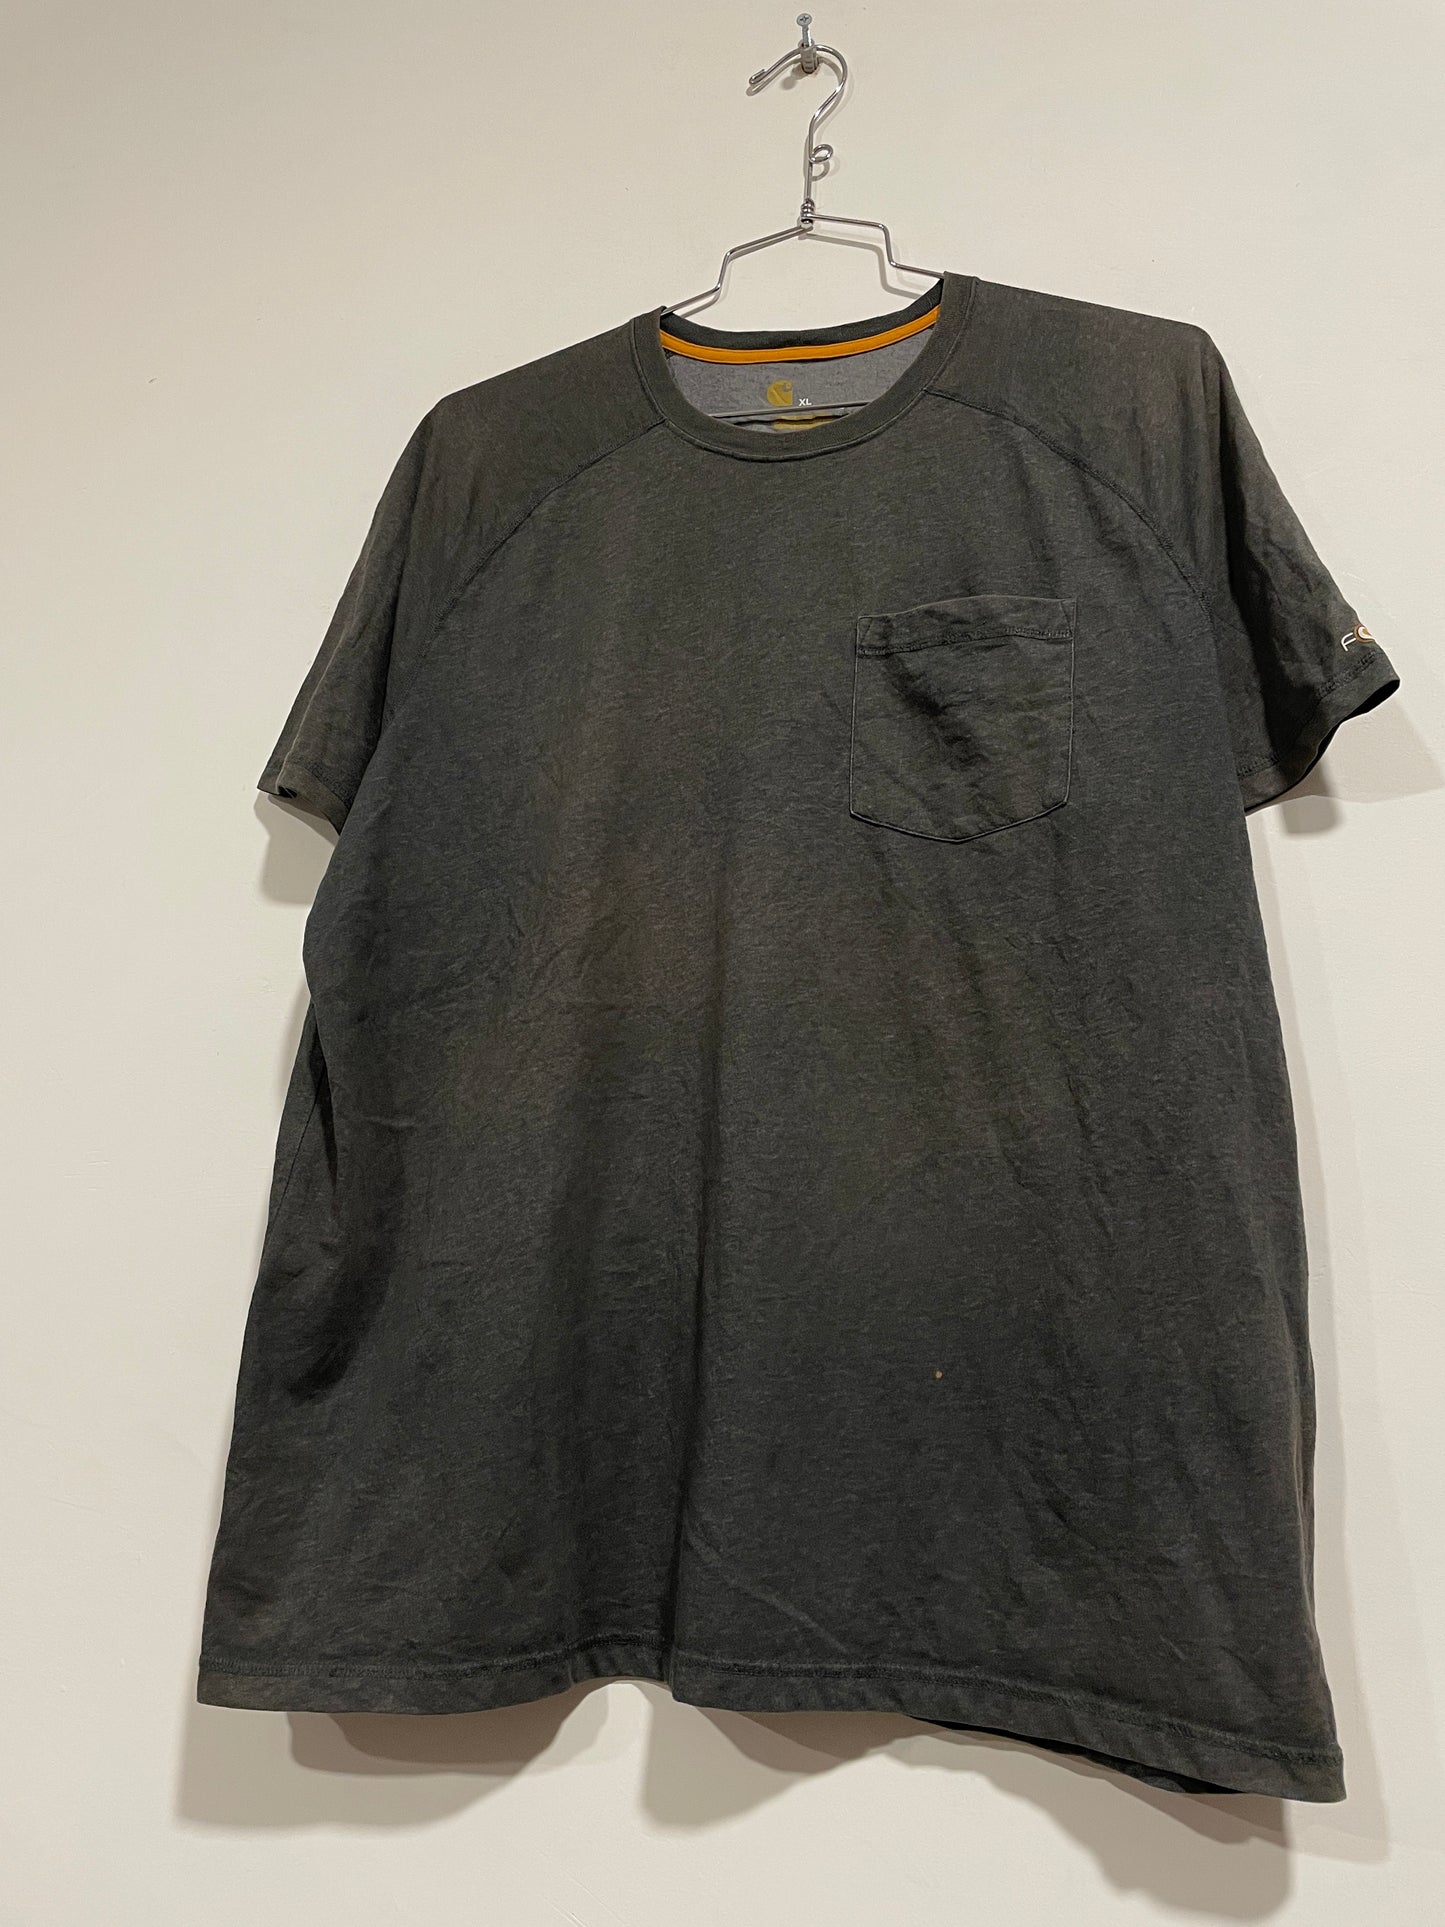 T shirt Carhartt workwear (MR041)